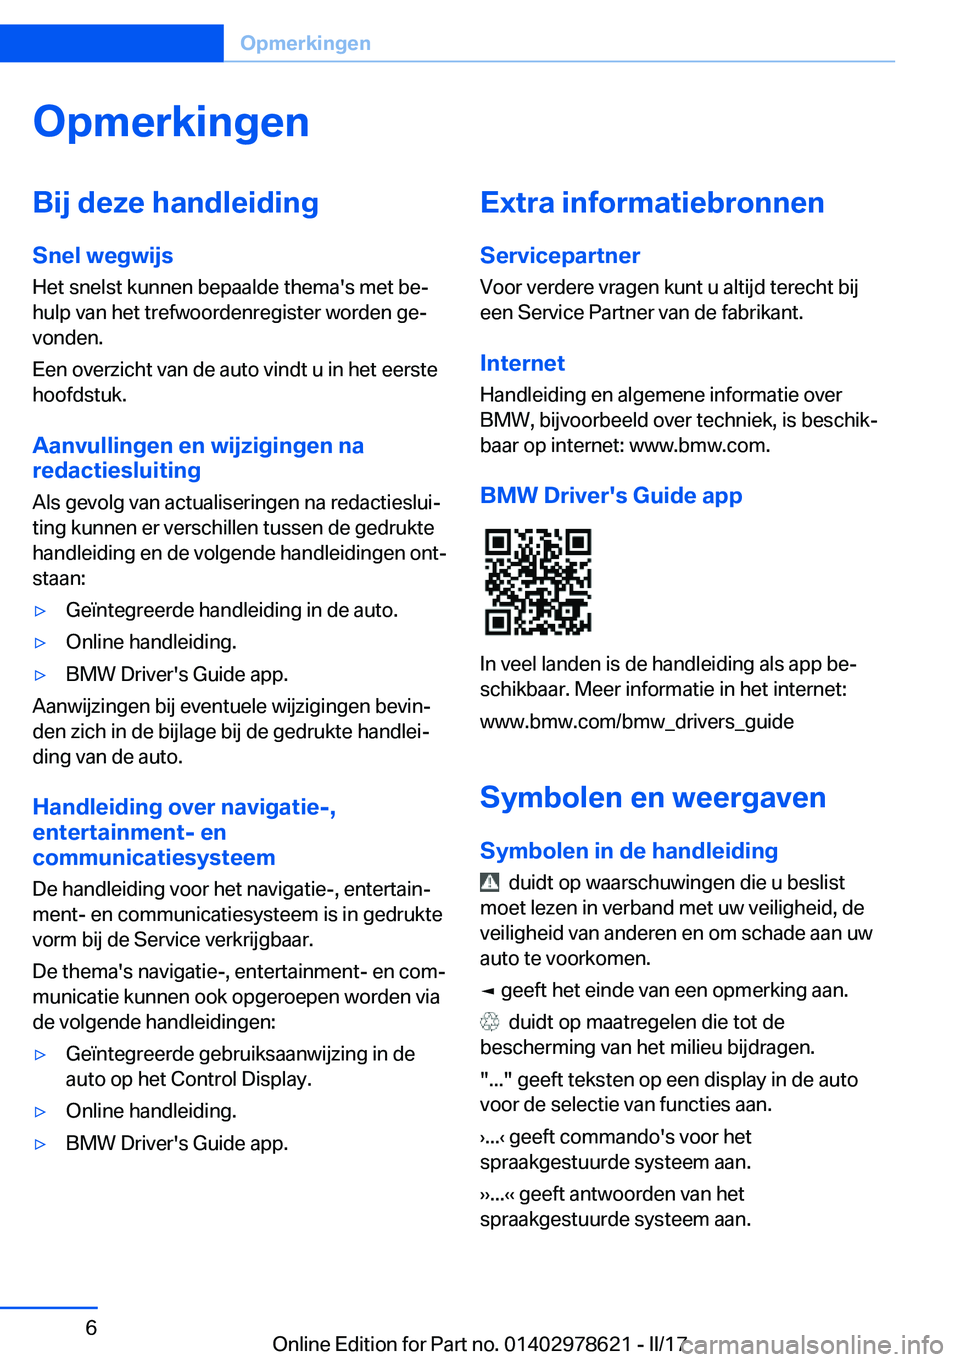 BMW 7 SERIES 2018  Instructieboekjes (in Dutch) �O�p�m�e�r�k�i�n�g�e�n�B�i�j��d�e�z�e��h�a�n�d�l�e�i�d�i�n�g�S�n�e�l��w�e�g�w�i�j�s
�H�e�t� �s�n�e�l�s�t� �k�u�n�n�e�n� �b�e�p�a�a�l�d�e� �t�h�e�m�a�'�s� �m�e�t� �b�ej
�h�u�l�p� �v�a�n� �h�e�t